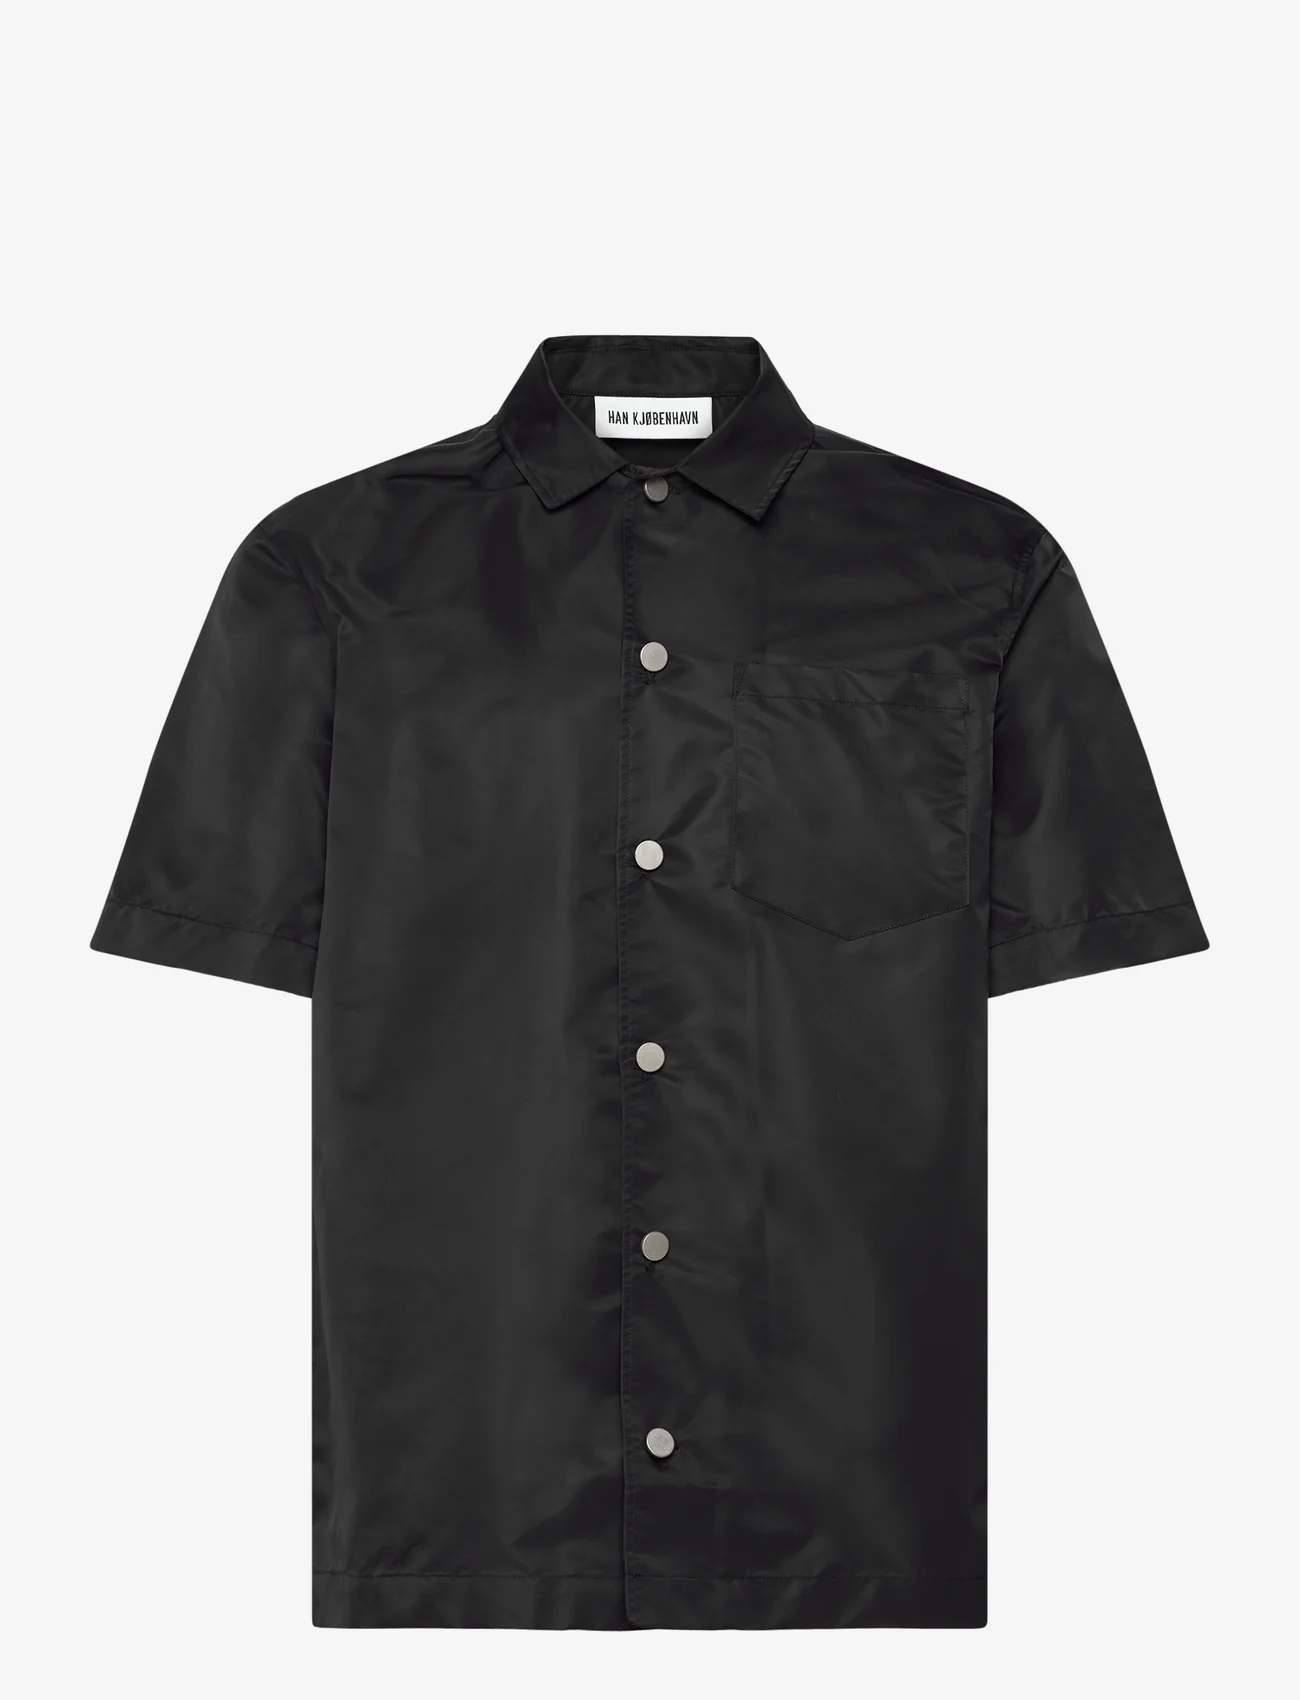 HAN Kjøbenhavn - Recycled Nylon Summer Shirt - kortærmede t-shirts - black - 0